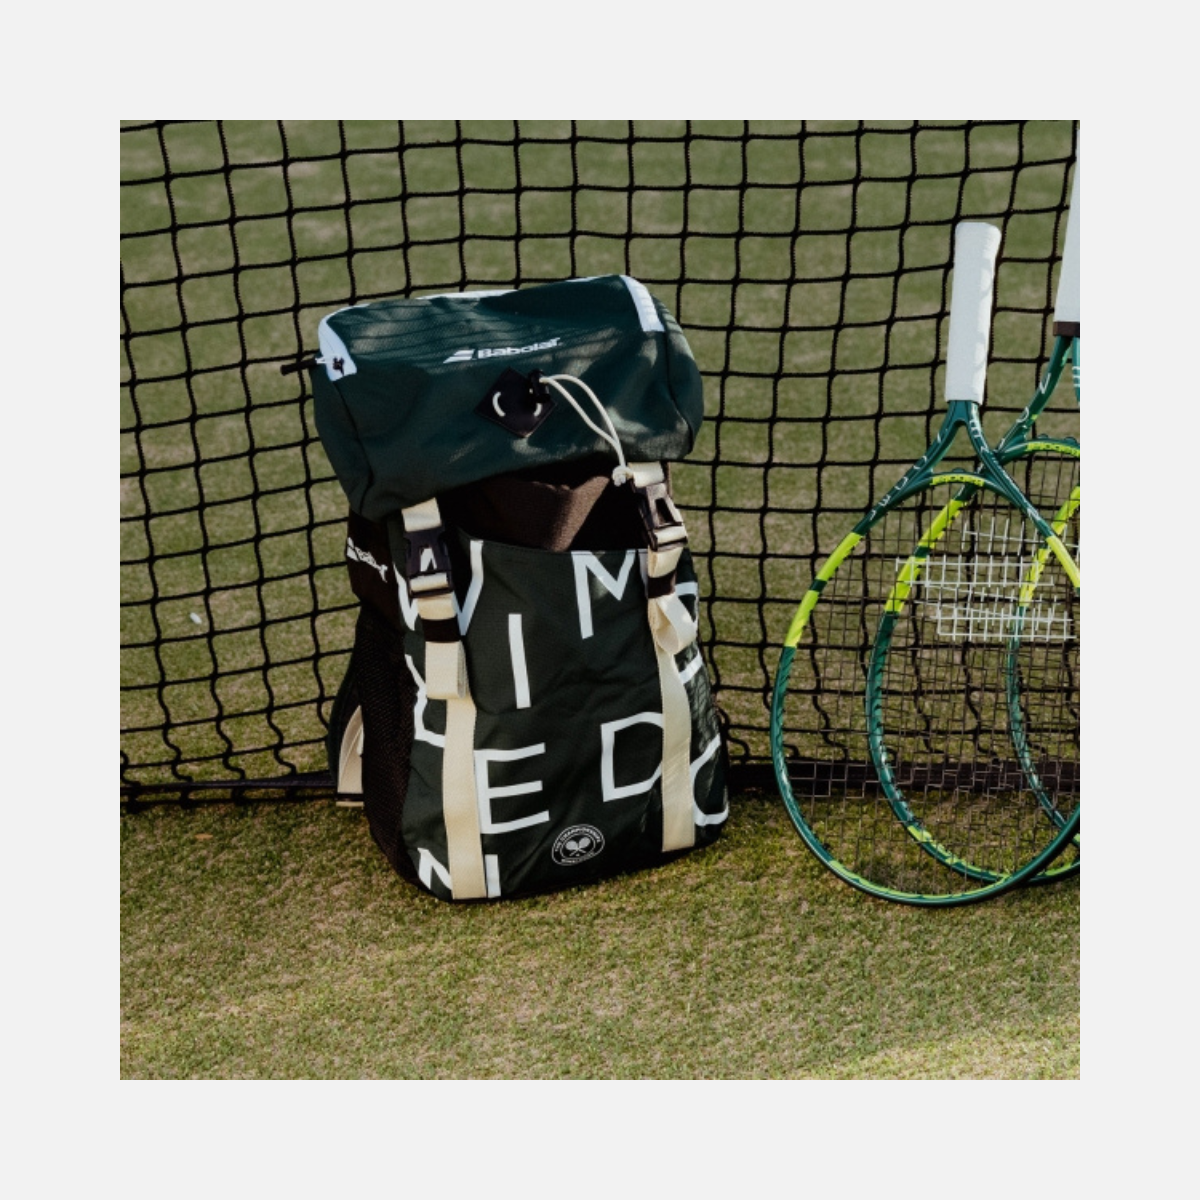 Babolat AXS Wimbledon Backpack -Black/Green